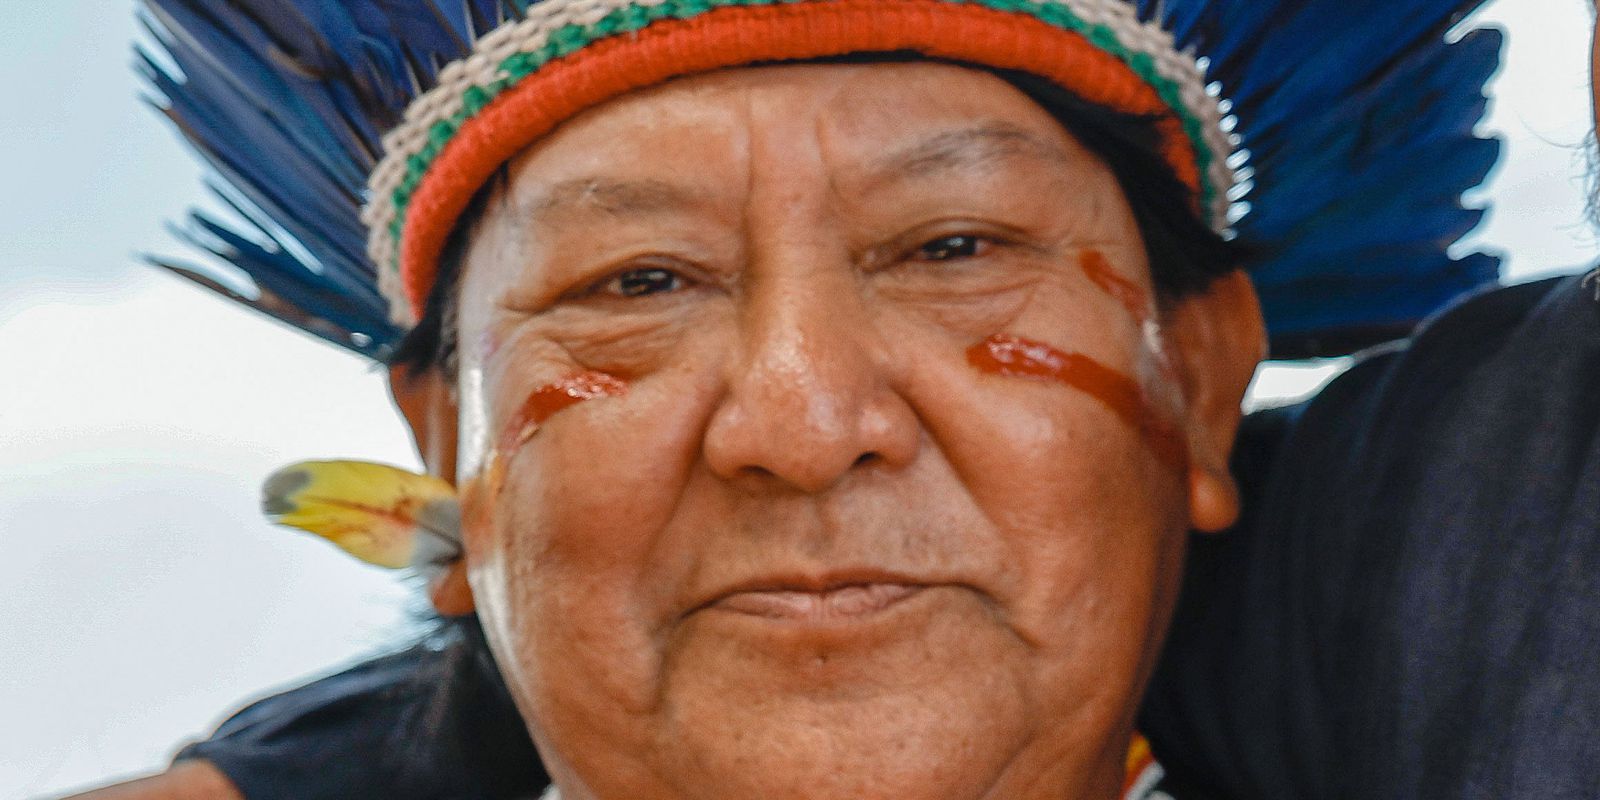 Maior terra indígena do Brasil, Yanomami contabiliza 27.152 pessoas